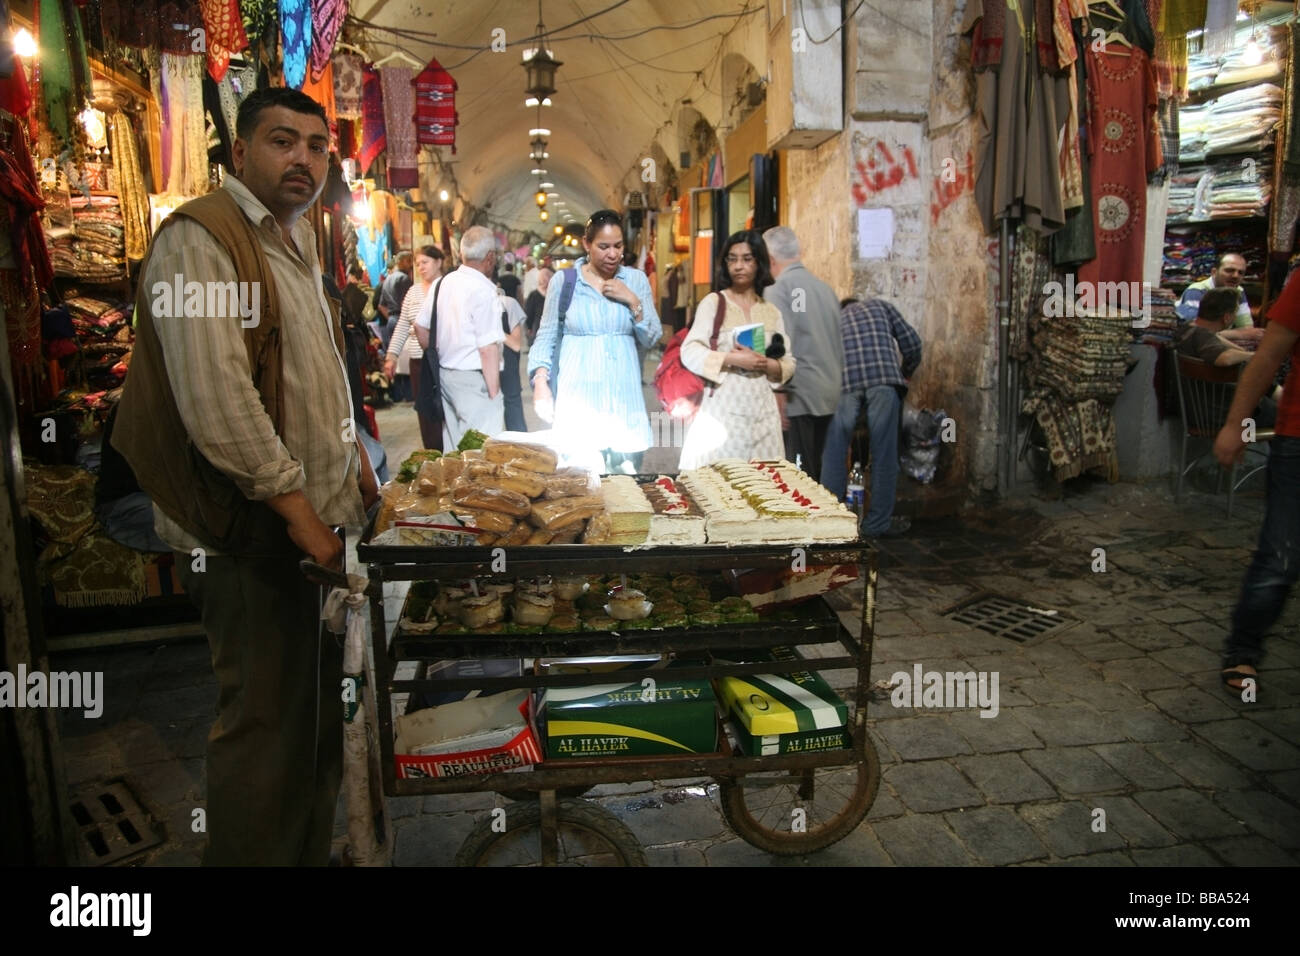 Vendor in the Souq in the Old City in Aleppo Syria Stock Photo